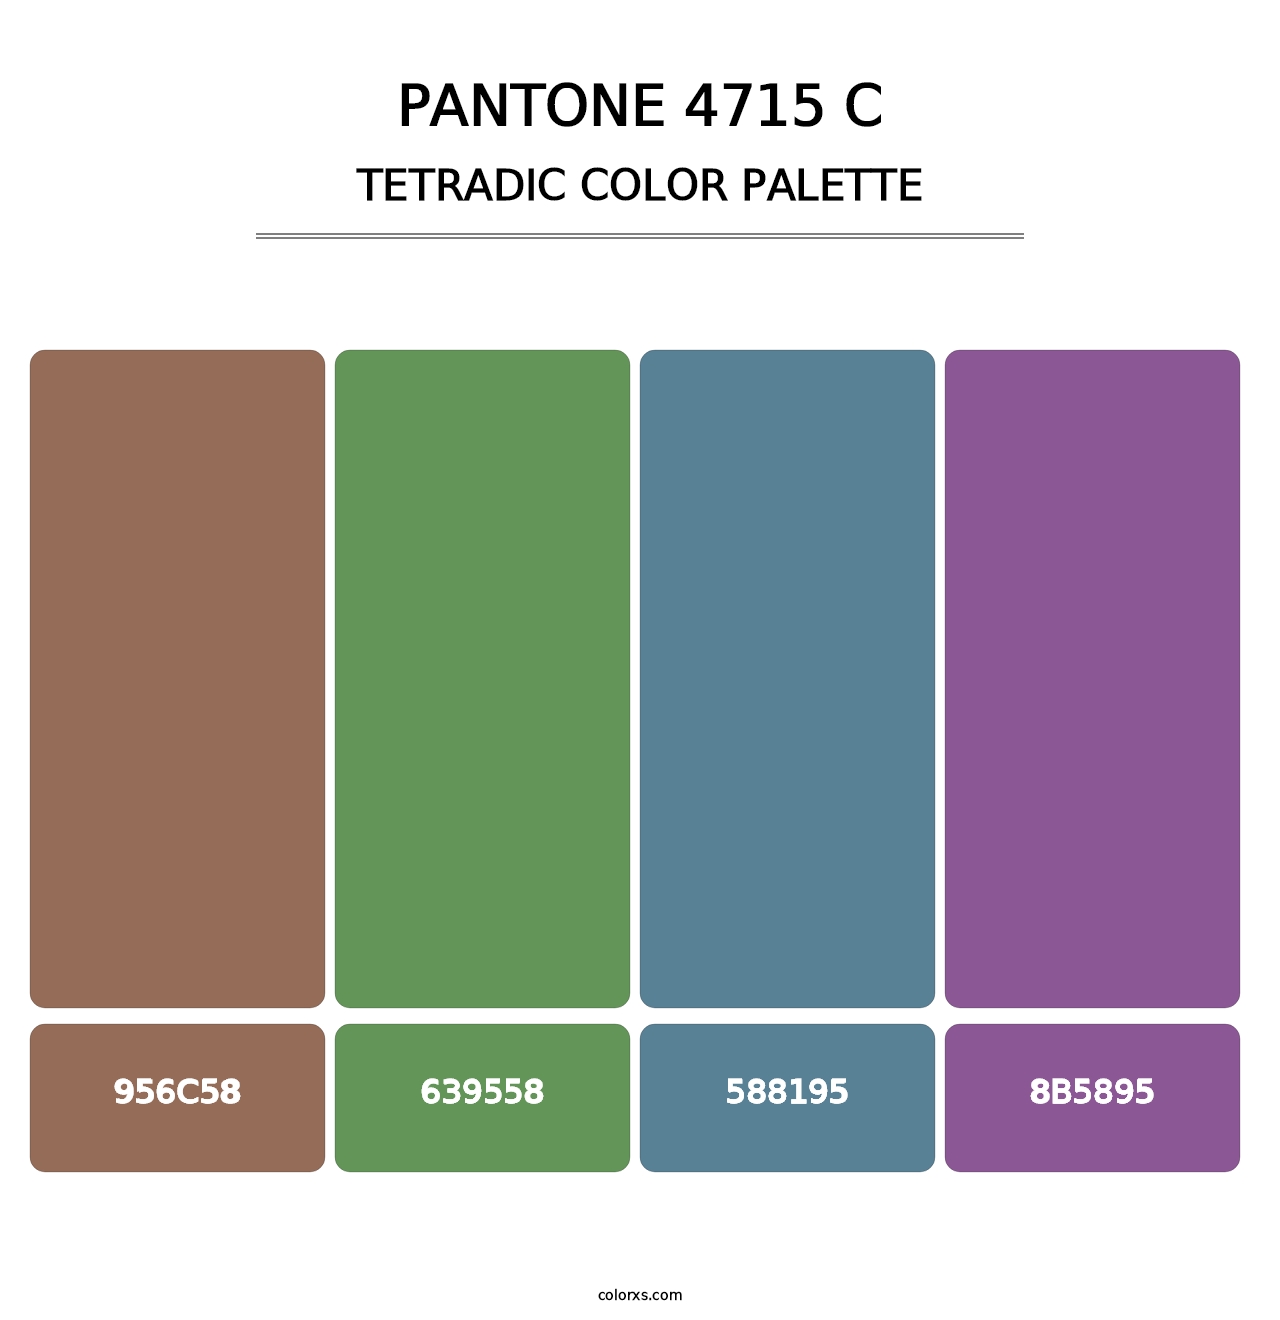 PANTONE 4715 C - Tetradic Color Palette